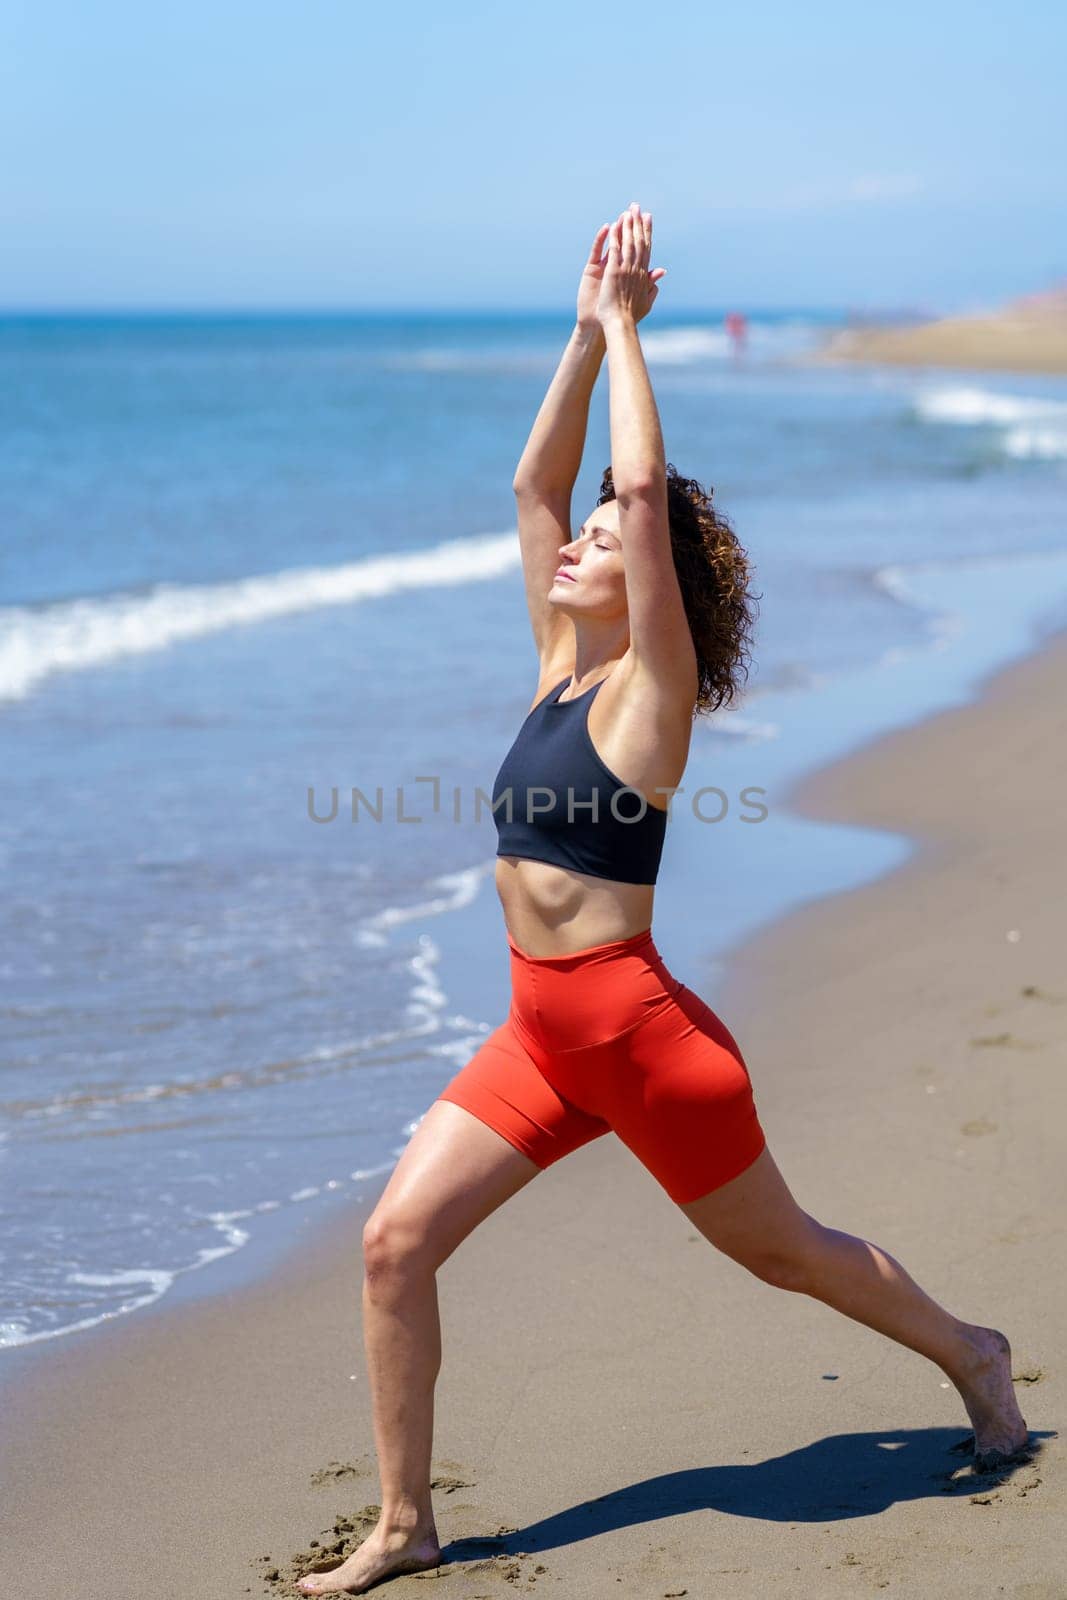 Sportswoman practicing yoga on beach by javiindy